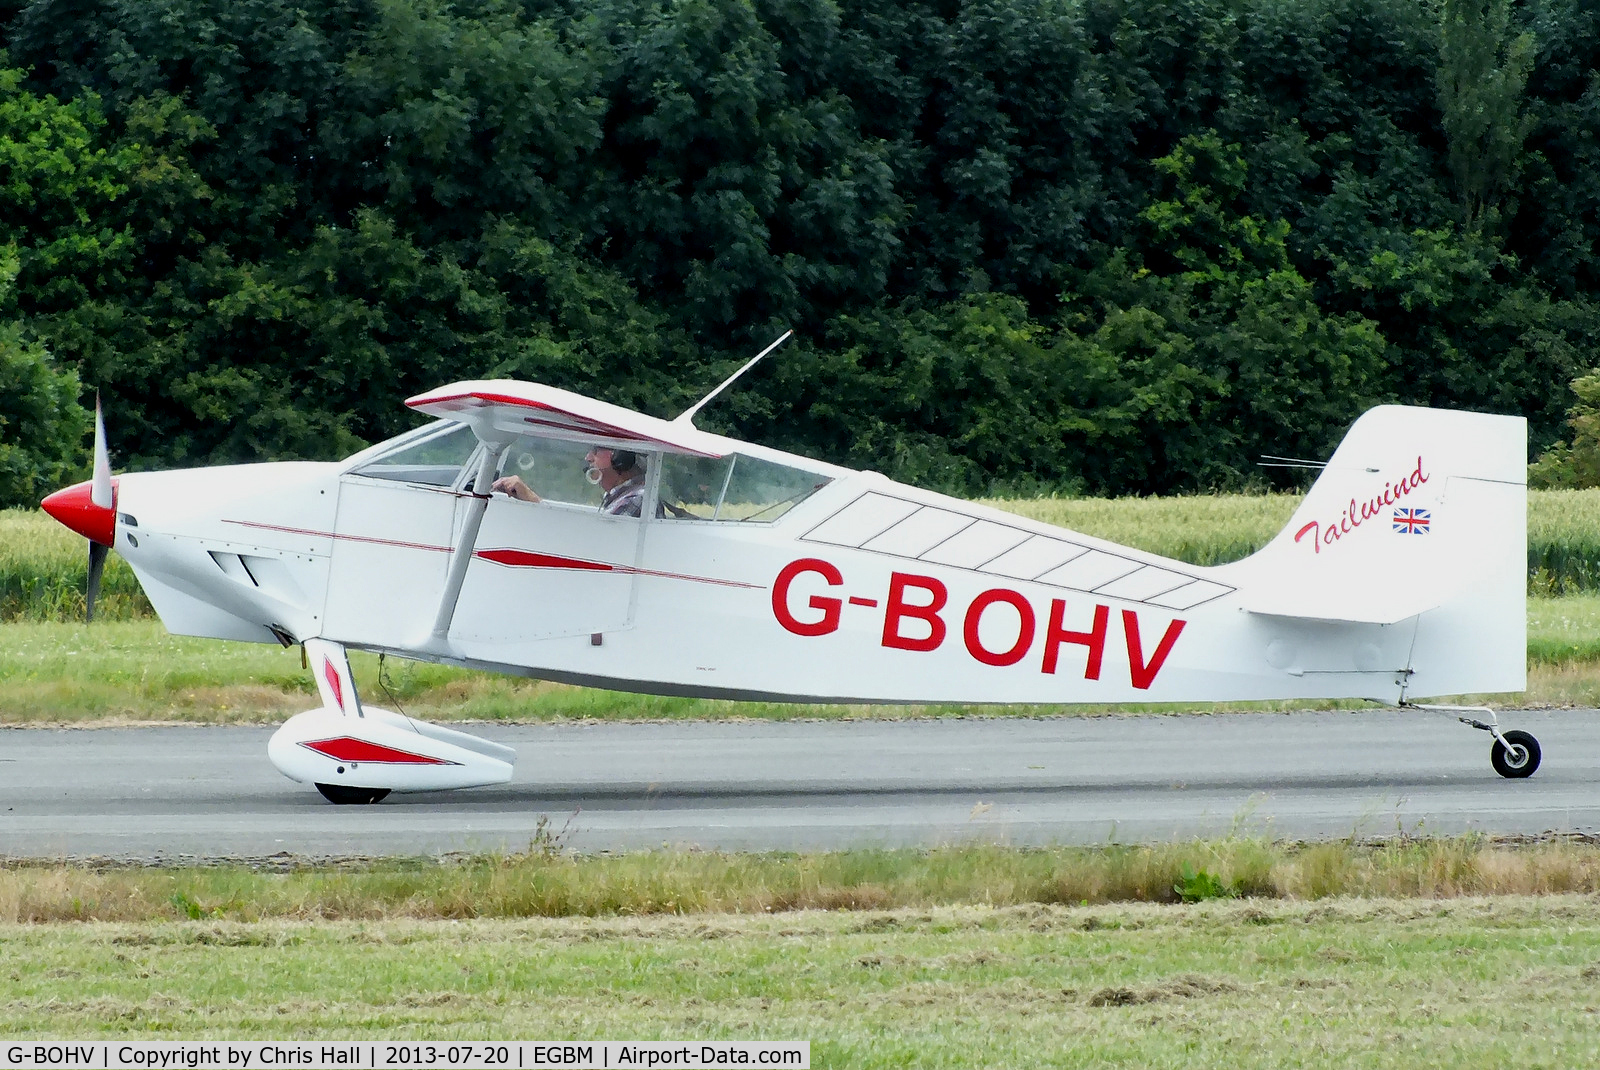 G-BOHV, 1990 Wittman W-8 Tailwind C/N PFA 031-11151, at the Tatenhill Charity Fly in